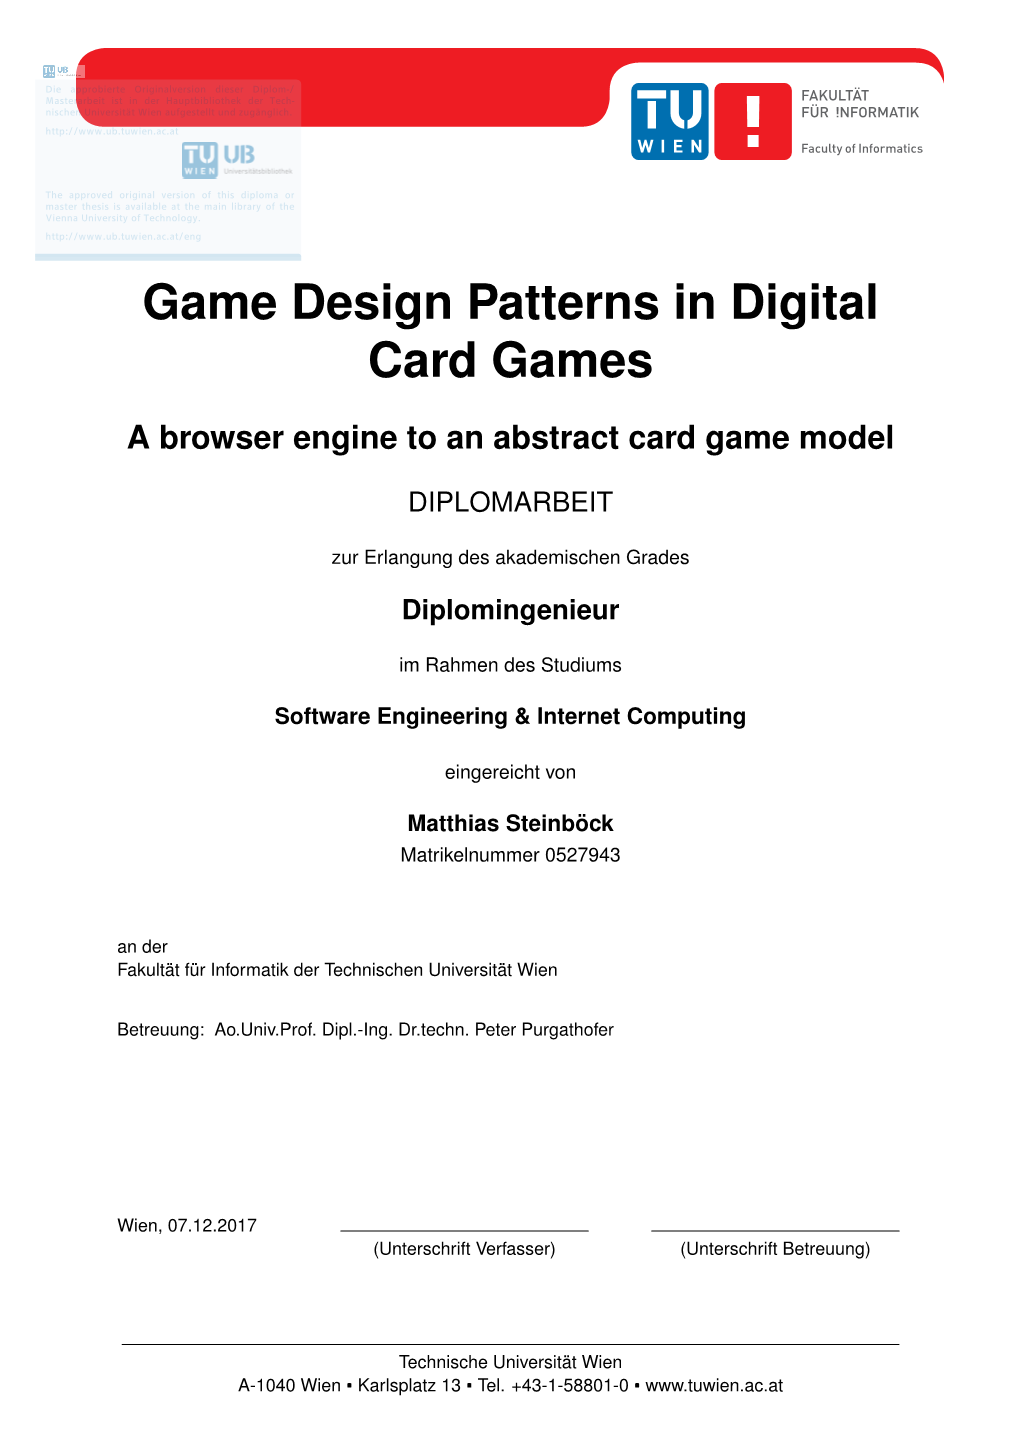 Game Design Patterns in Digital Card Games